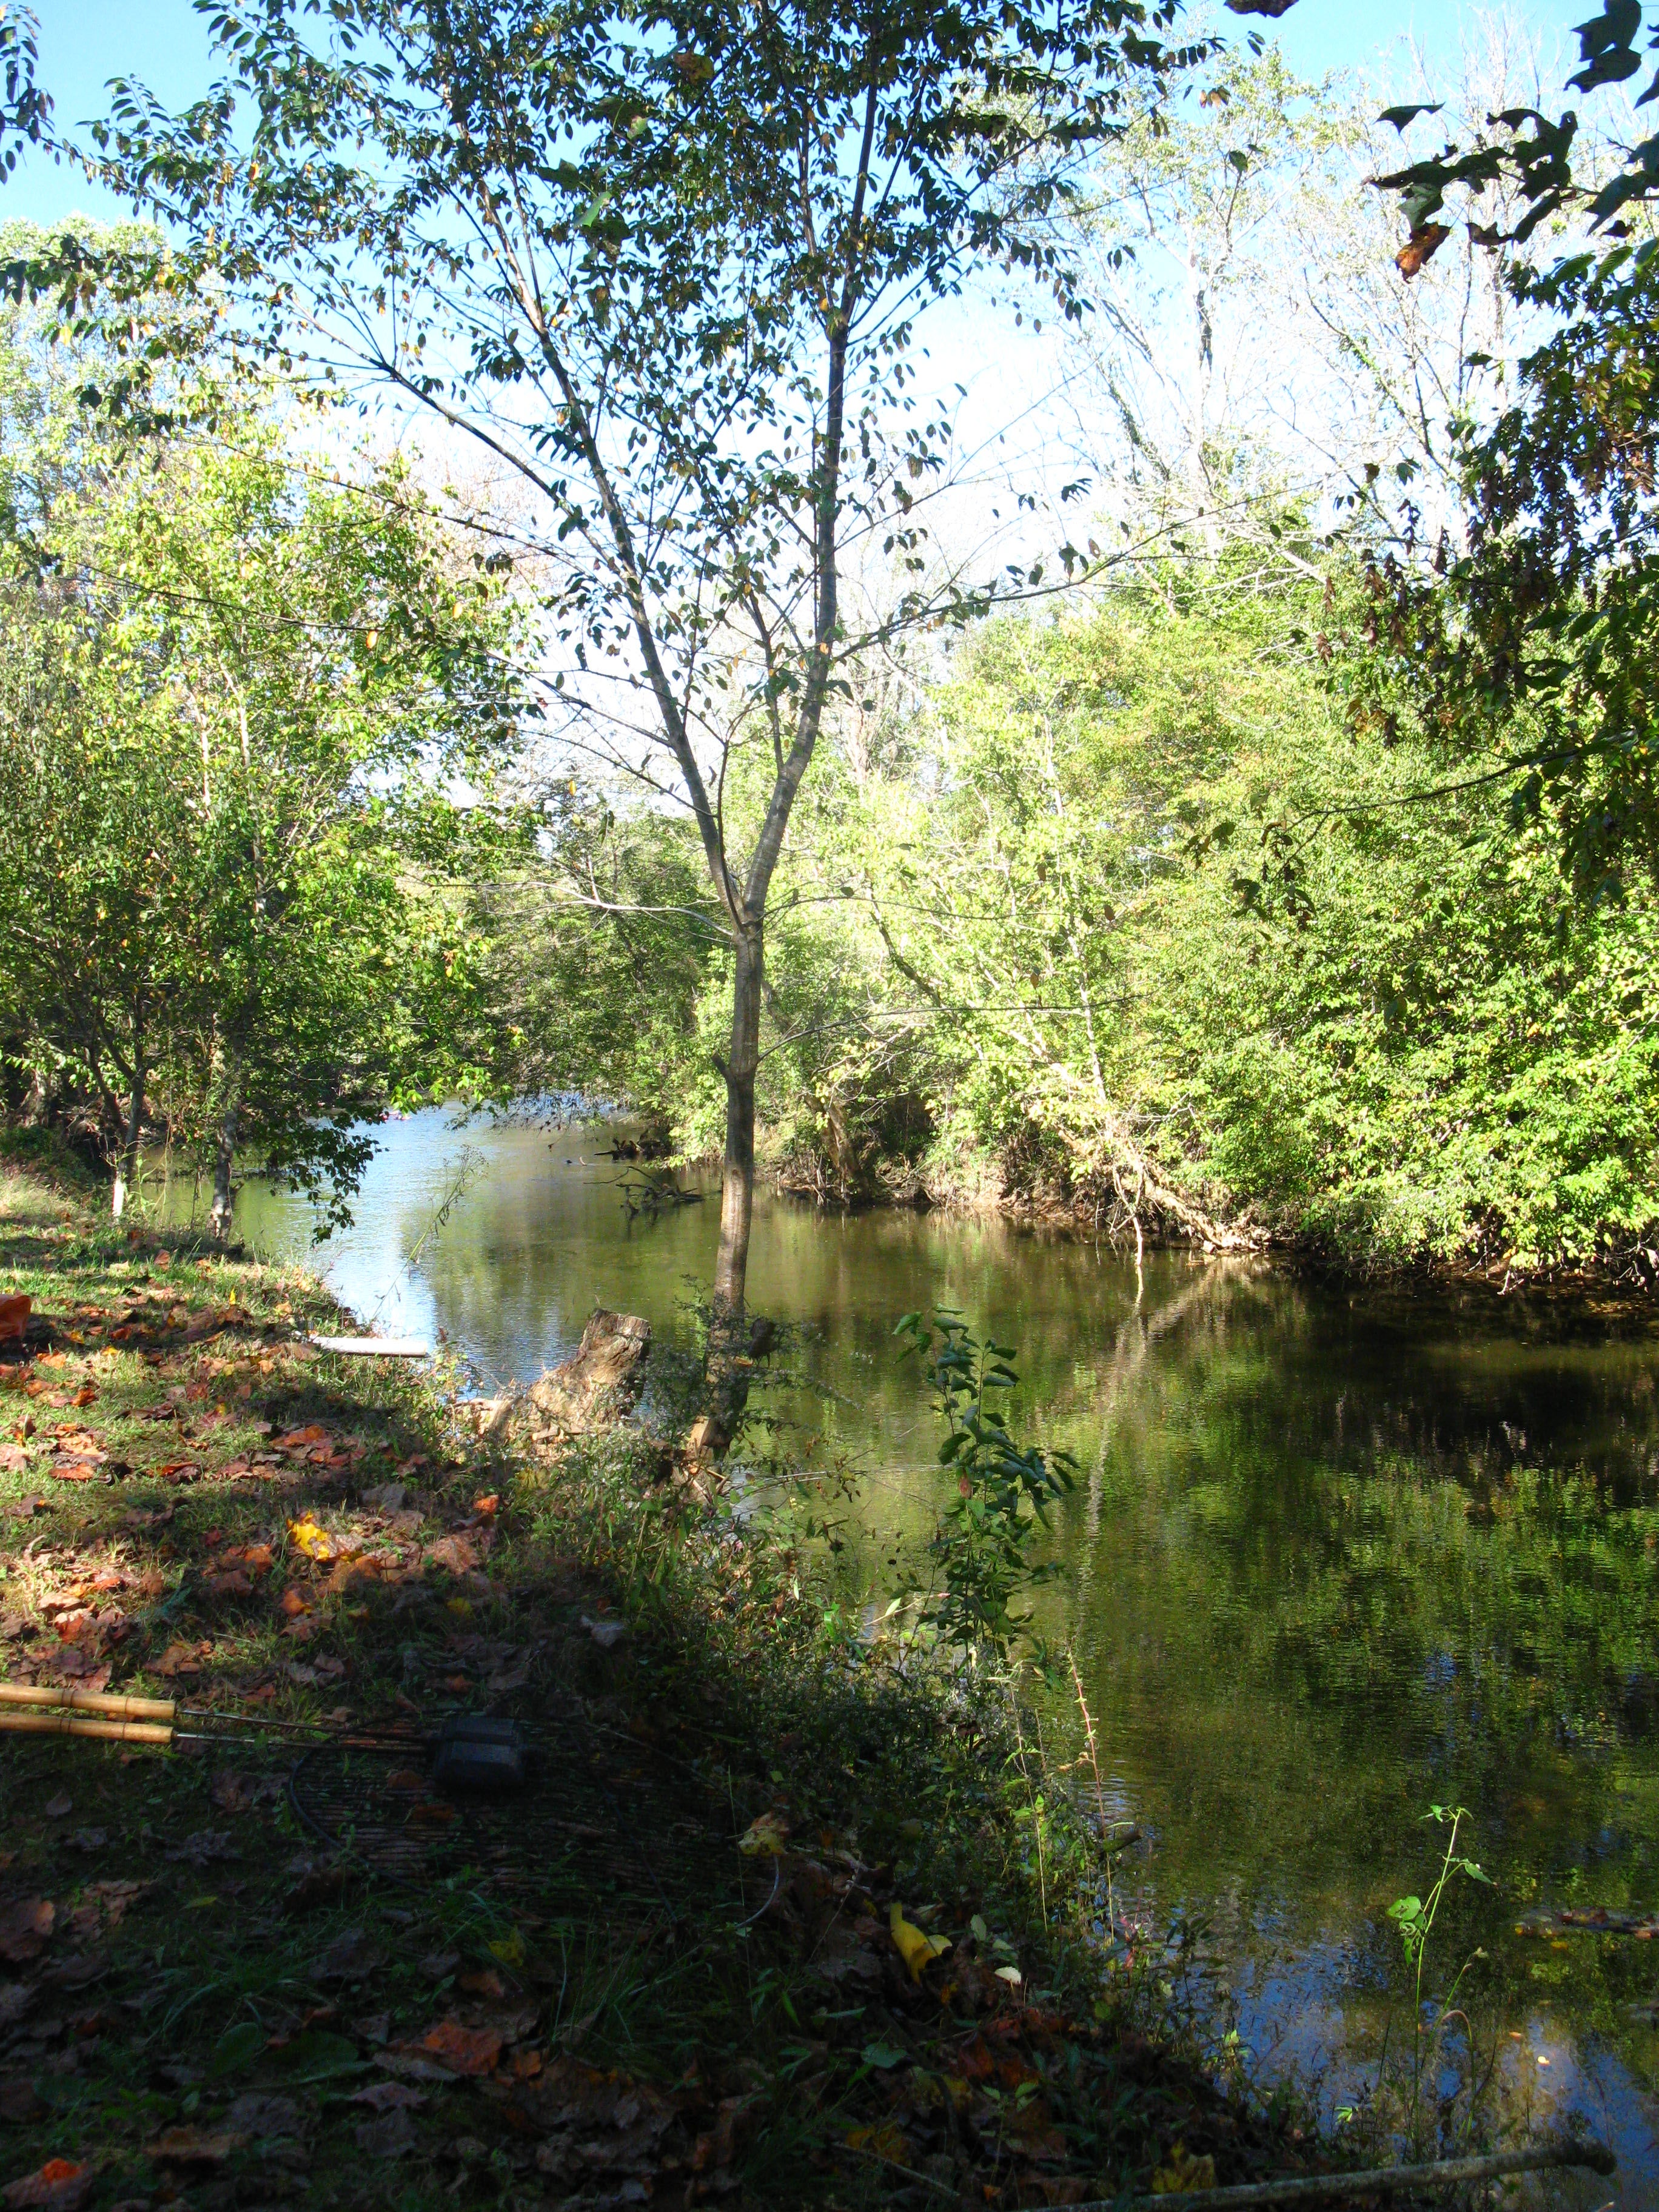 the creek that runs alongside